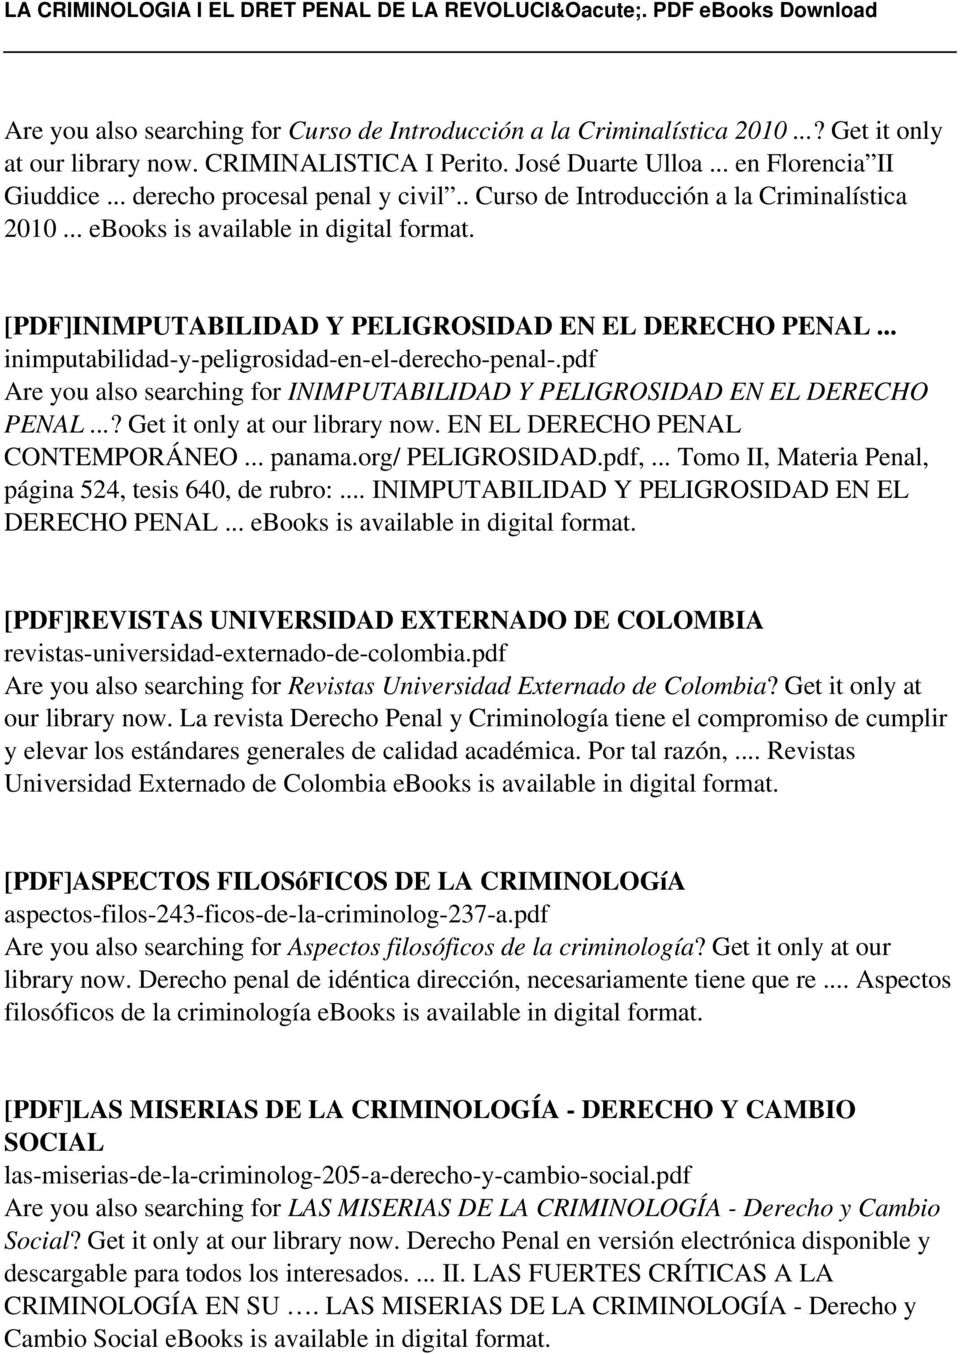 .. inimputabilidad-y-peligrosidad-en-el-derecho-penal-.pdf Are you also searching for INIMPUTABILIDAD Y PELIGROSIDAD EN EL DERECHO PENAL...? Get it only at our library now.